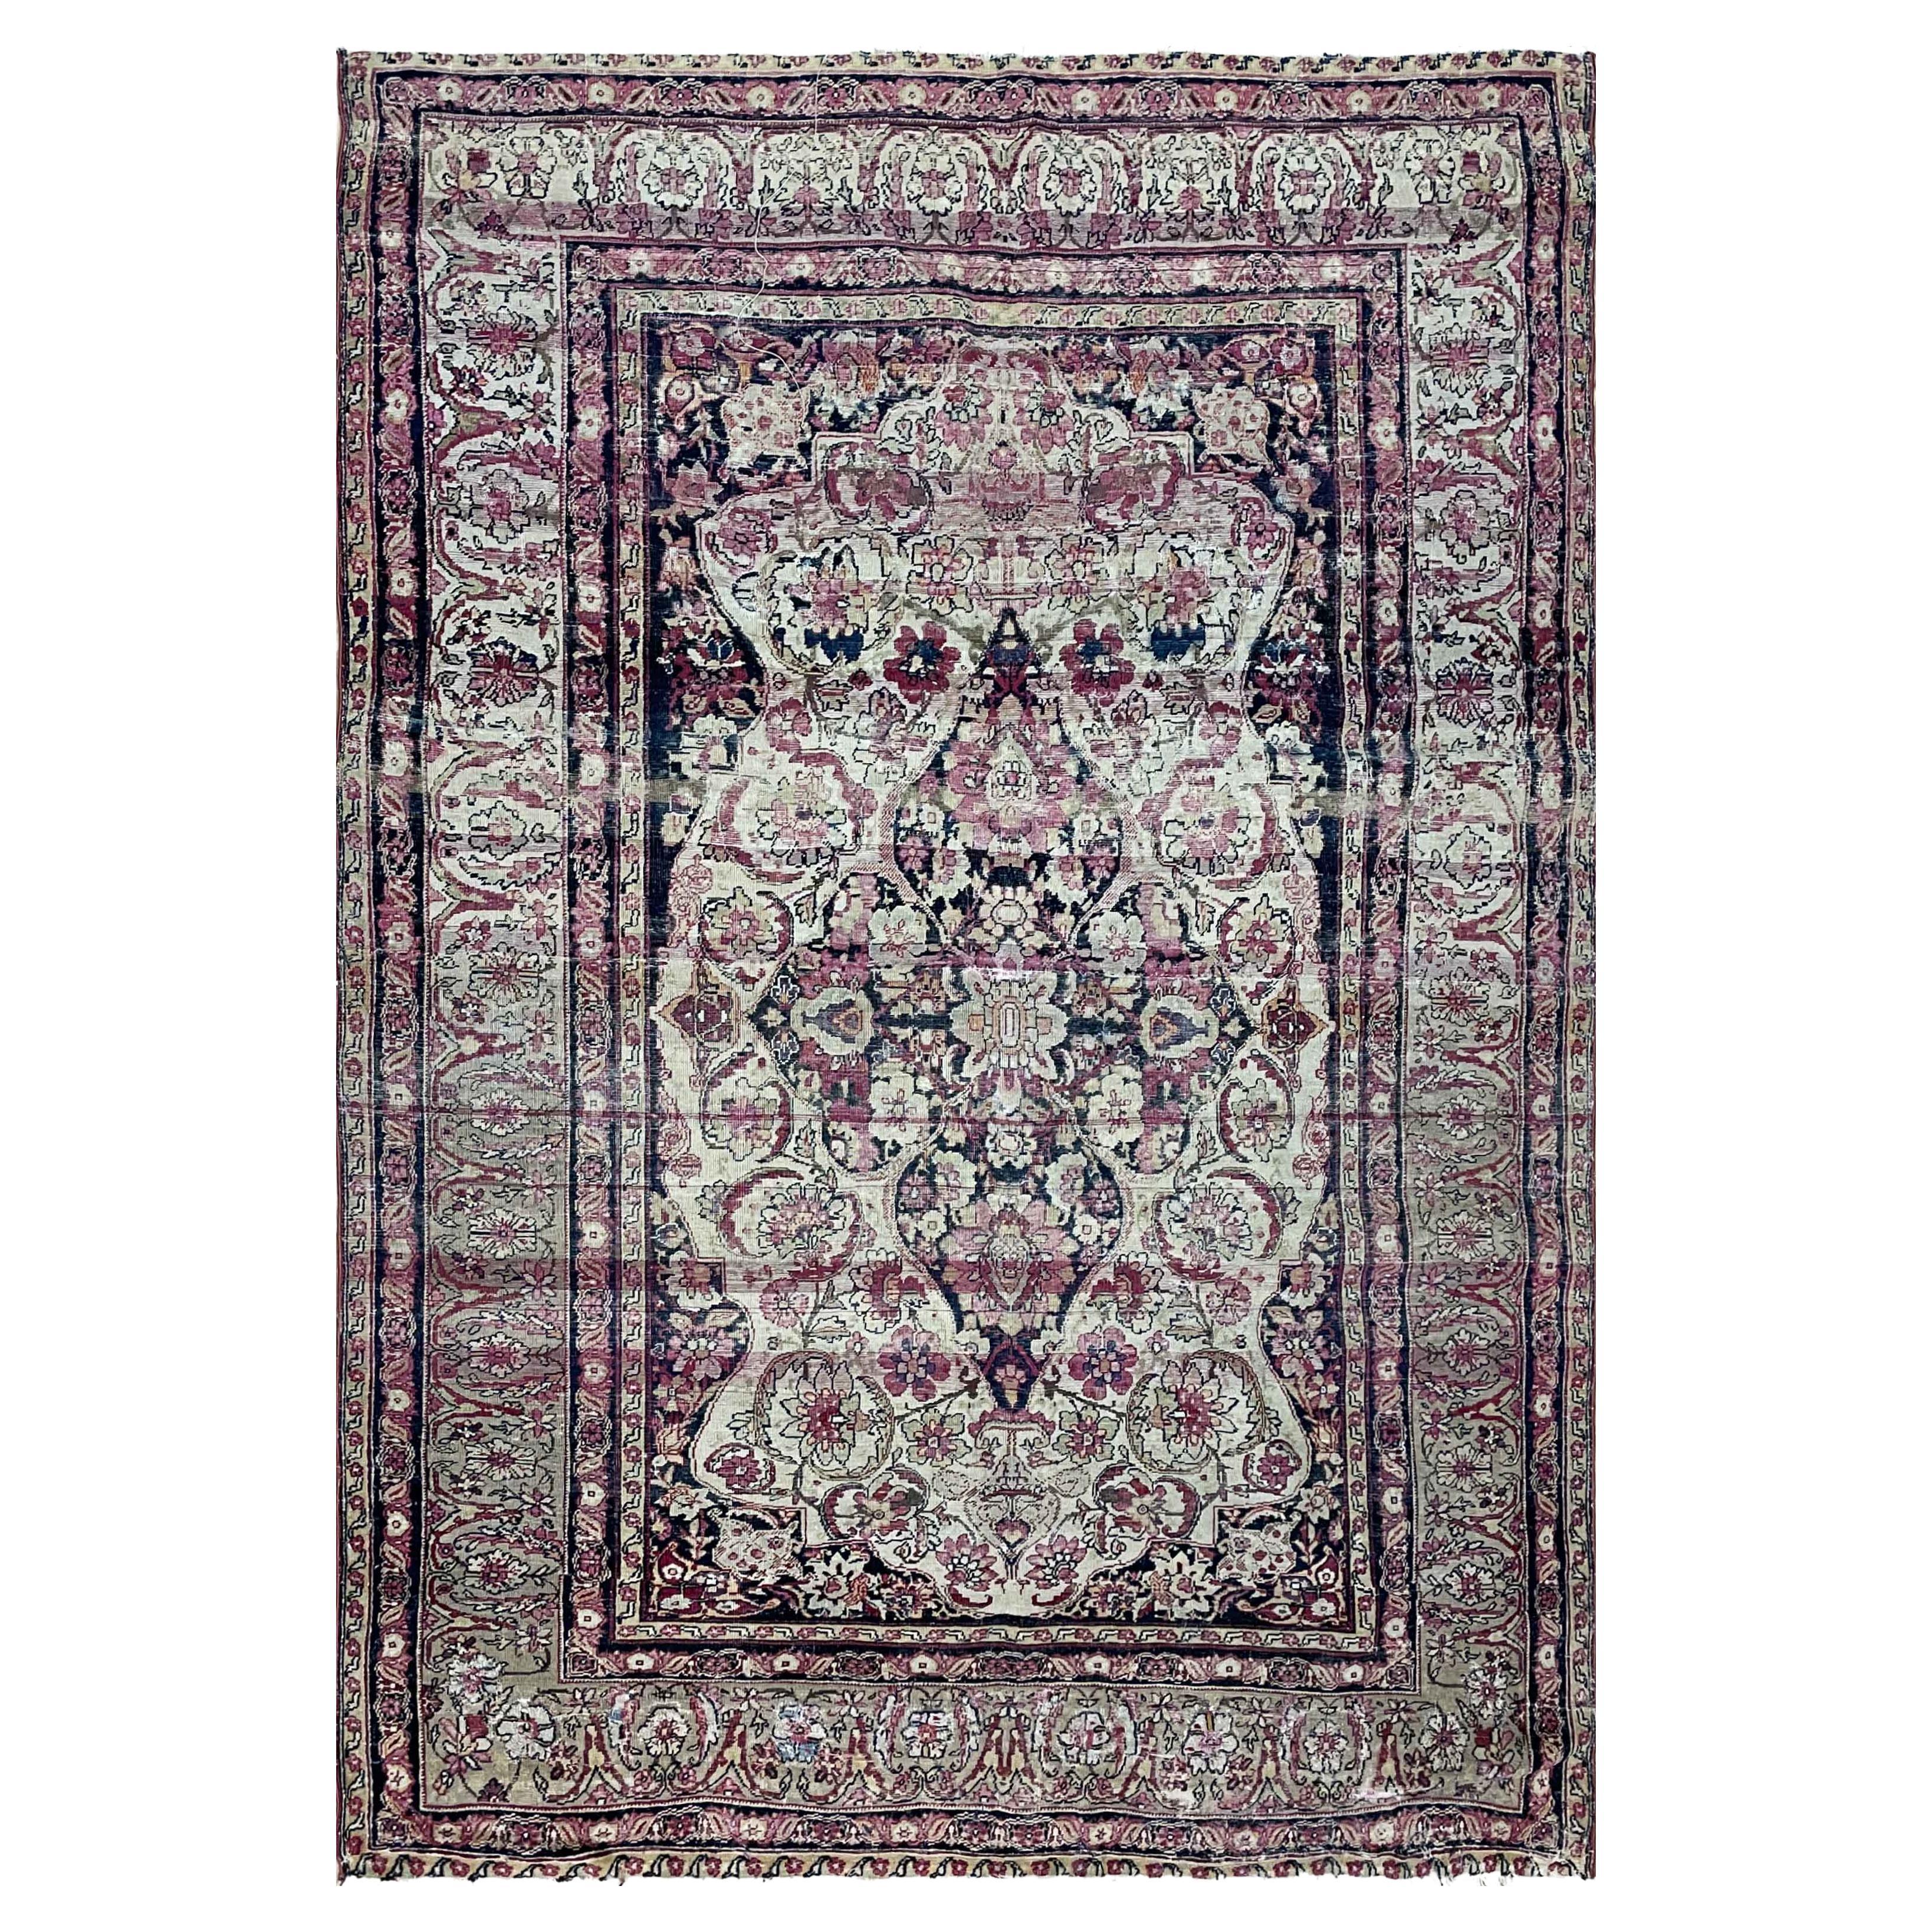 Antique Persian Kermanshah/Laver Carpet, c-1880's, Extremally Fine 